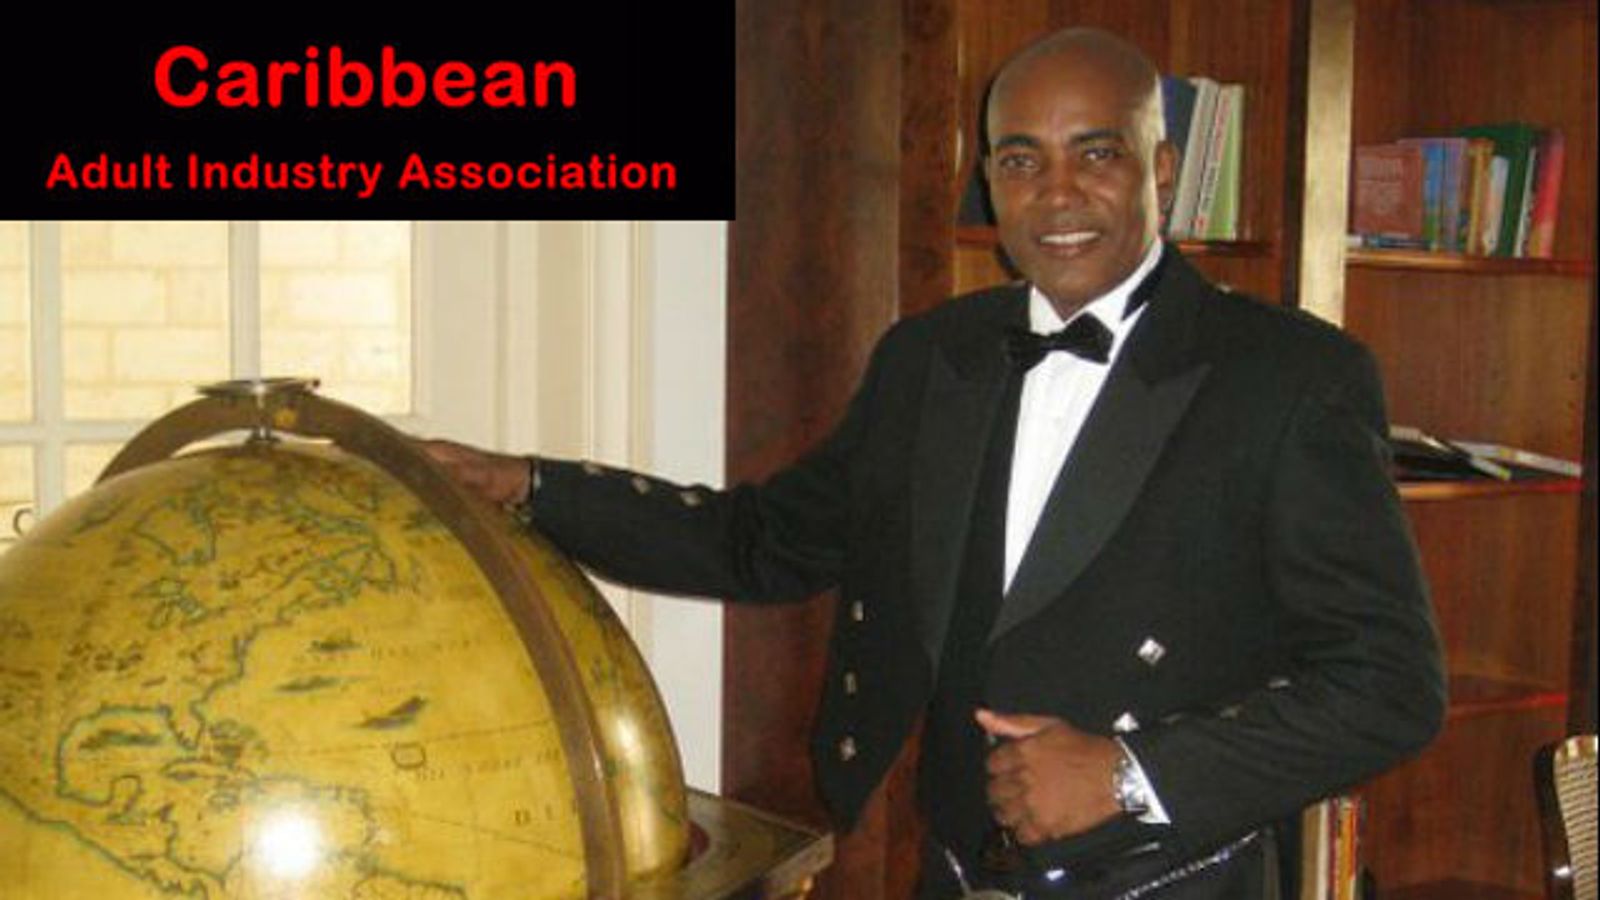 Caribbean Adult Industry Association Announces January Launch